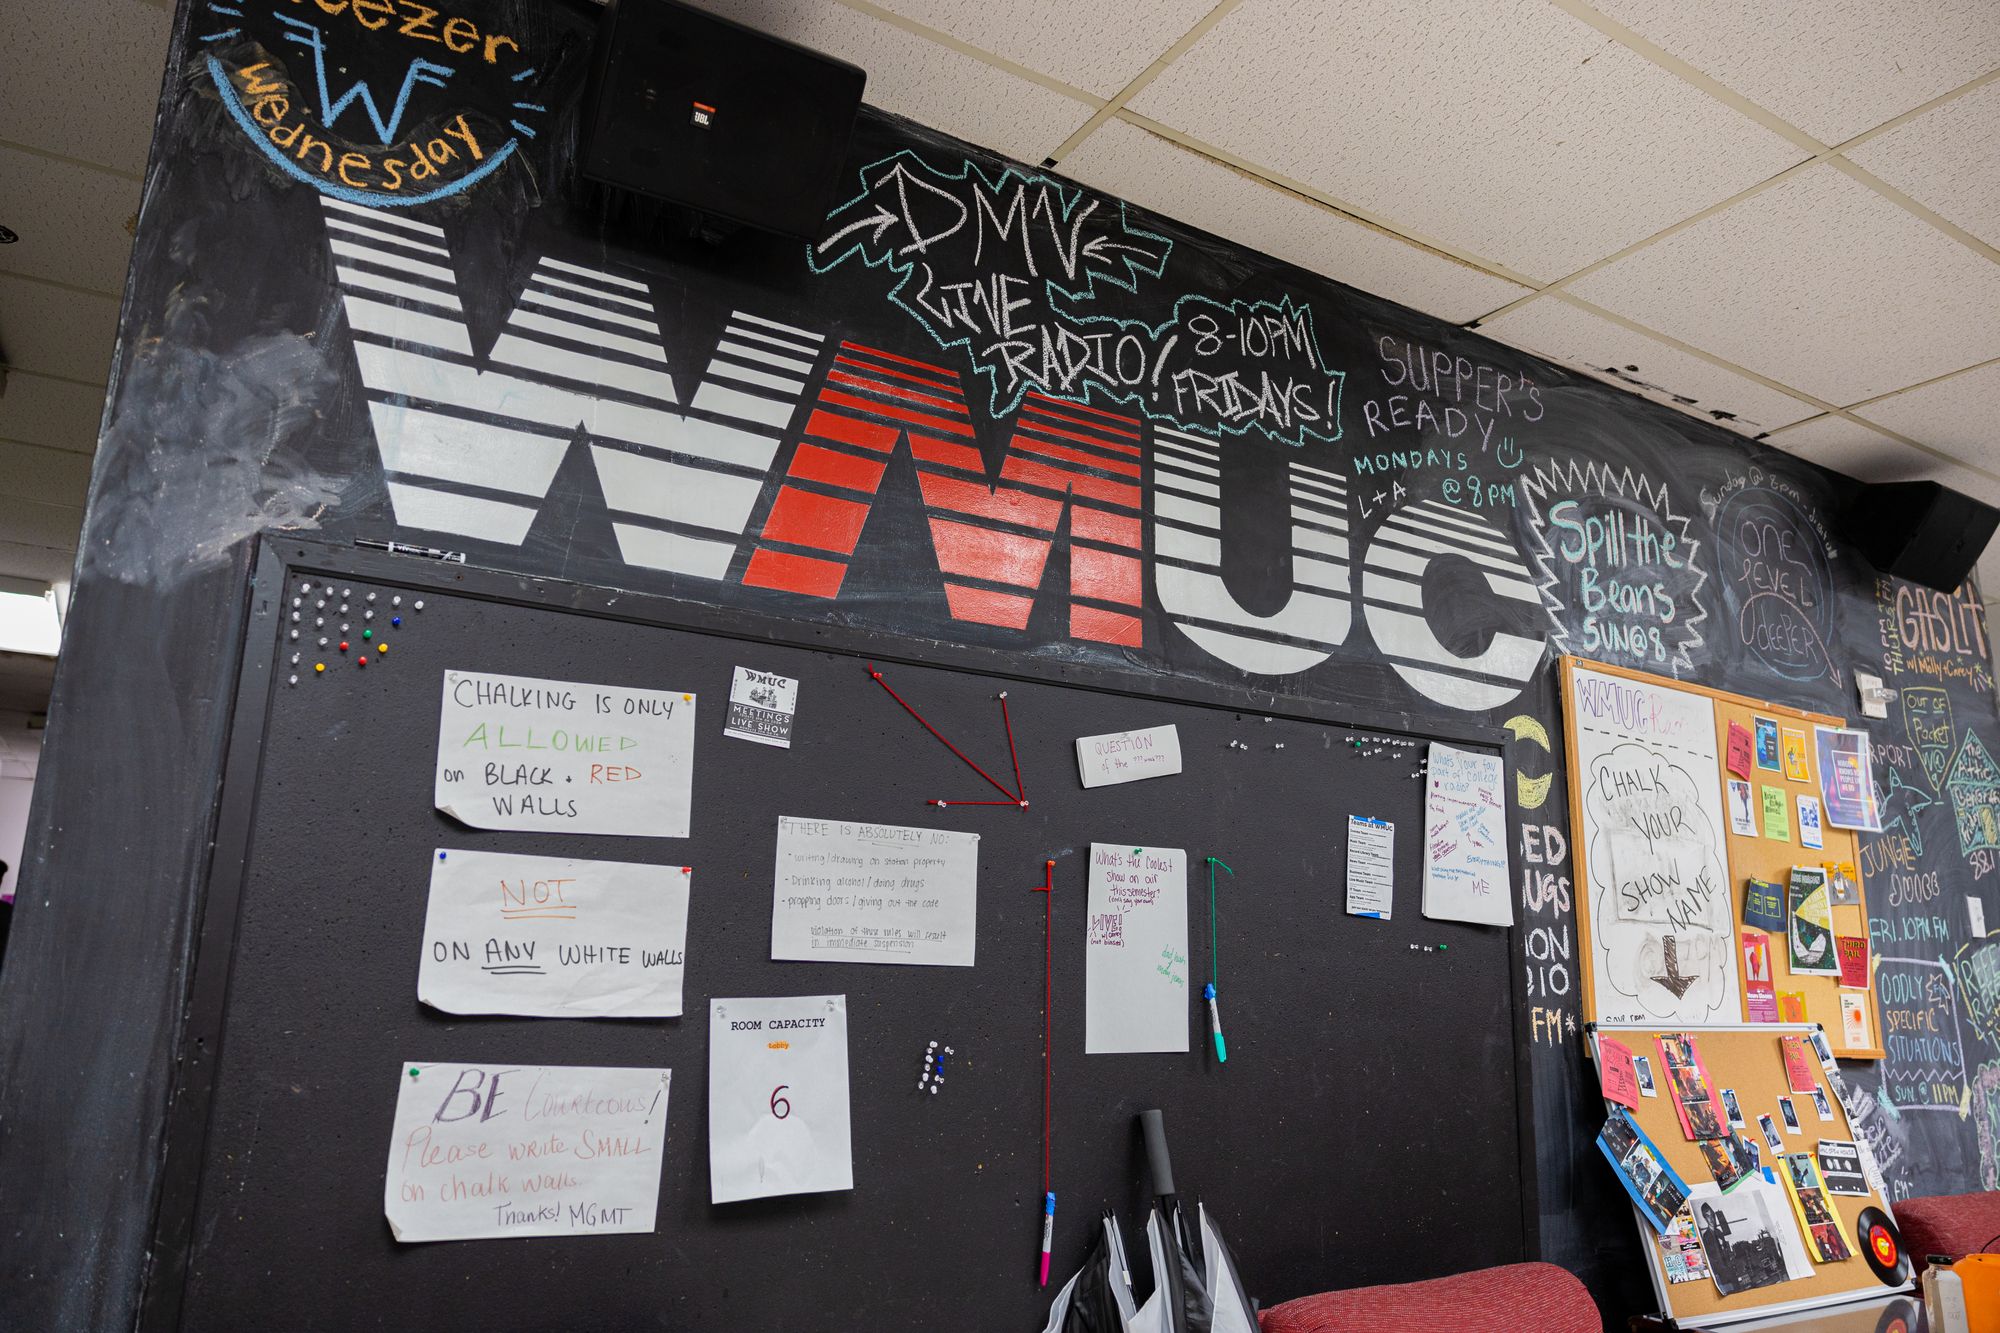 WMUC Radio